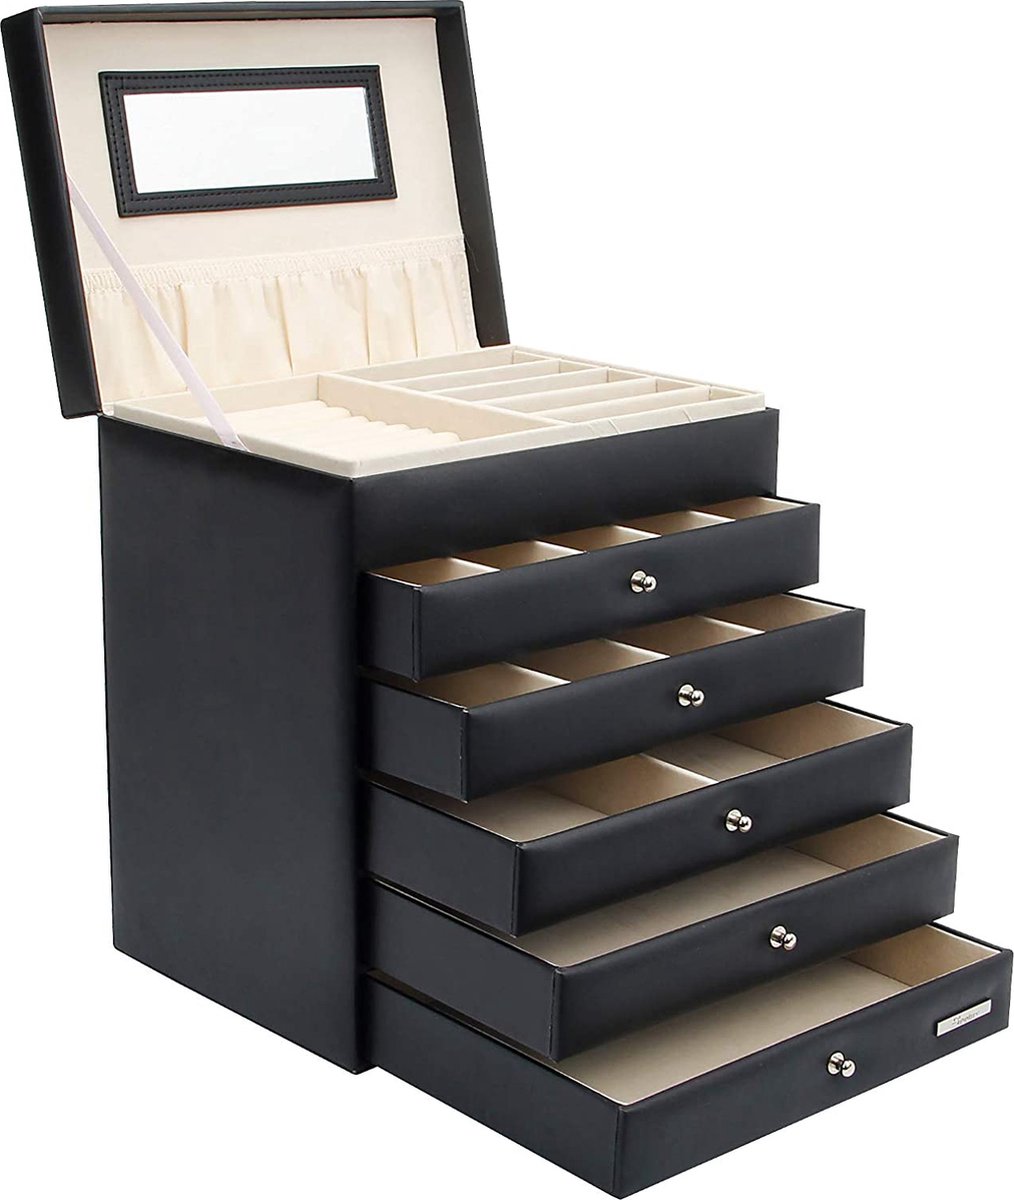 Yorbay juwelendoos - beautycase - sieradendoos - juwelenkast- koffer - sieradenkoffer met spiegel, 5 laden (zwart)